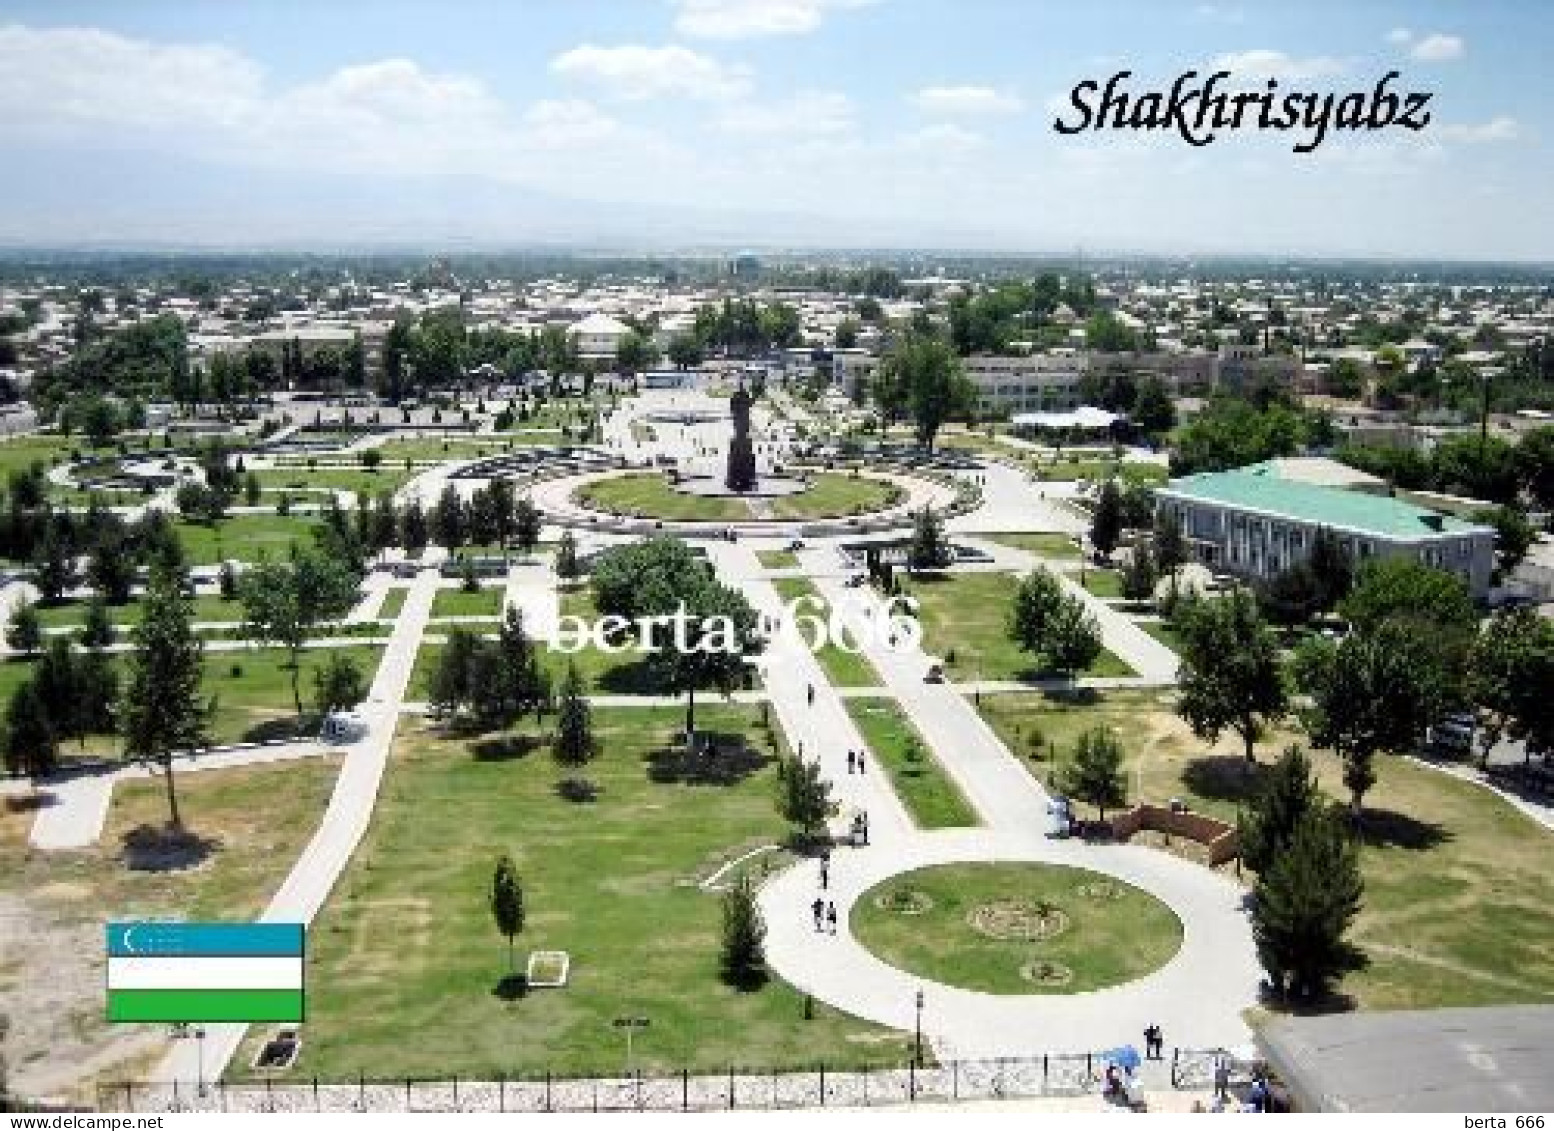 Uzbekistan Shakhrisabz Overview UNESCO New Postcard - Uzbekistan